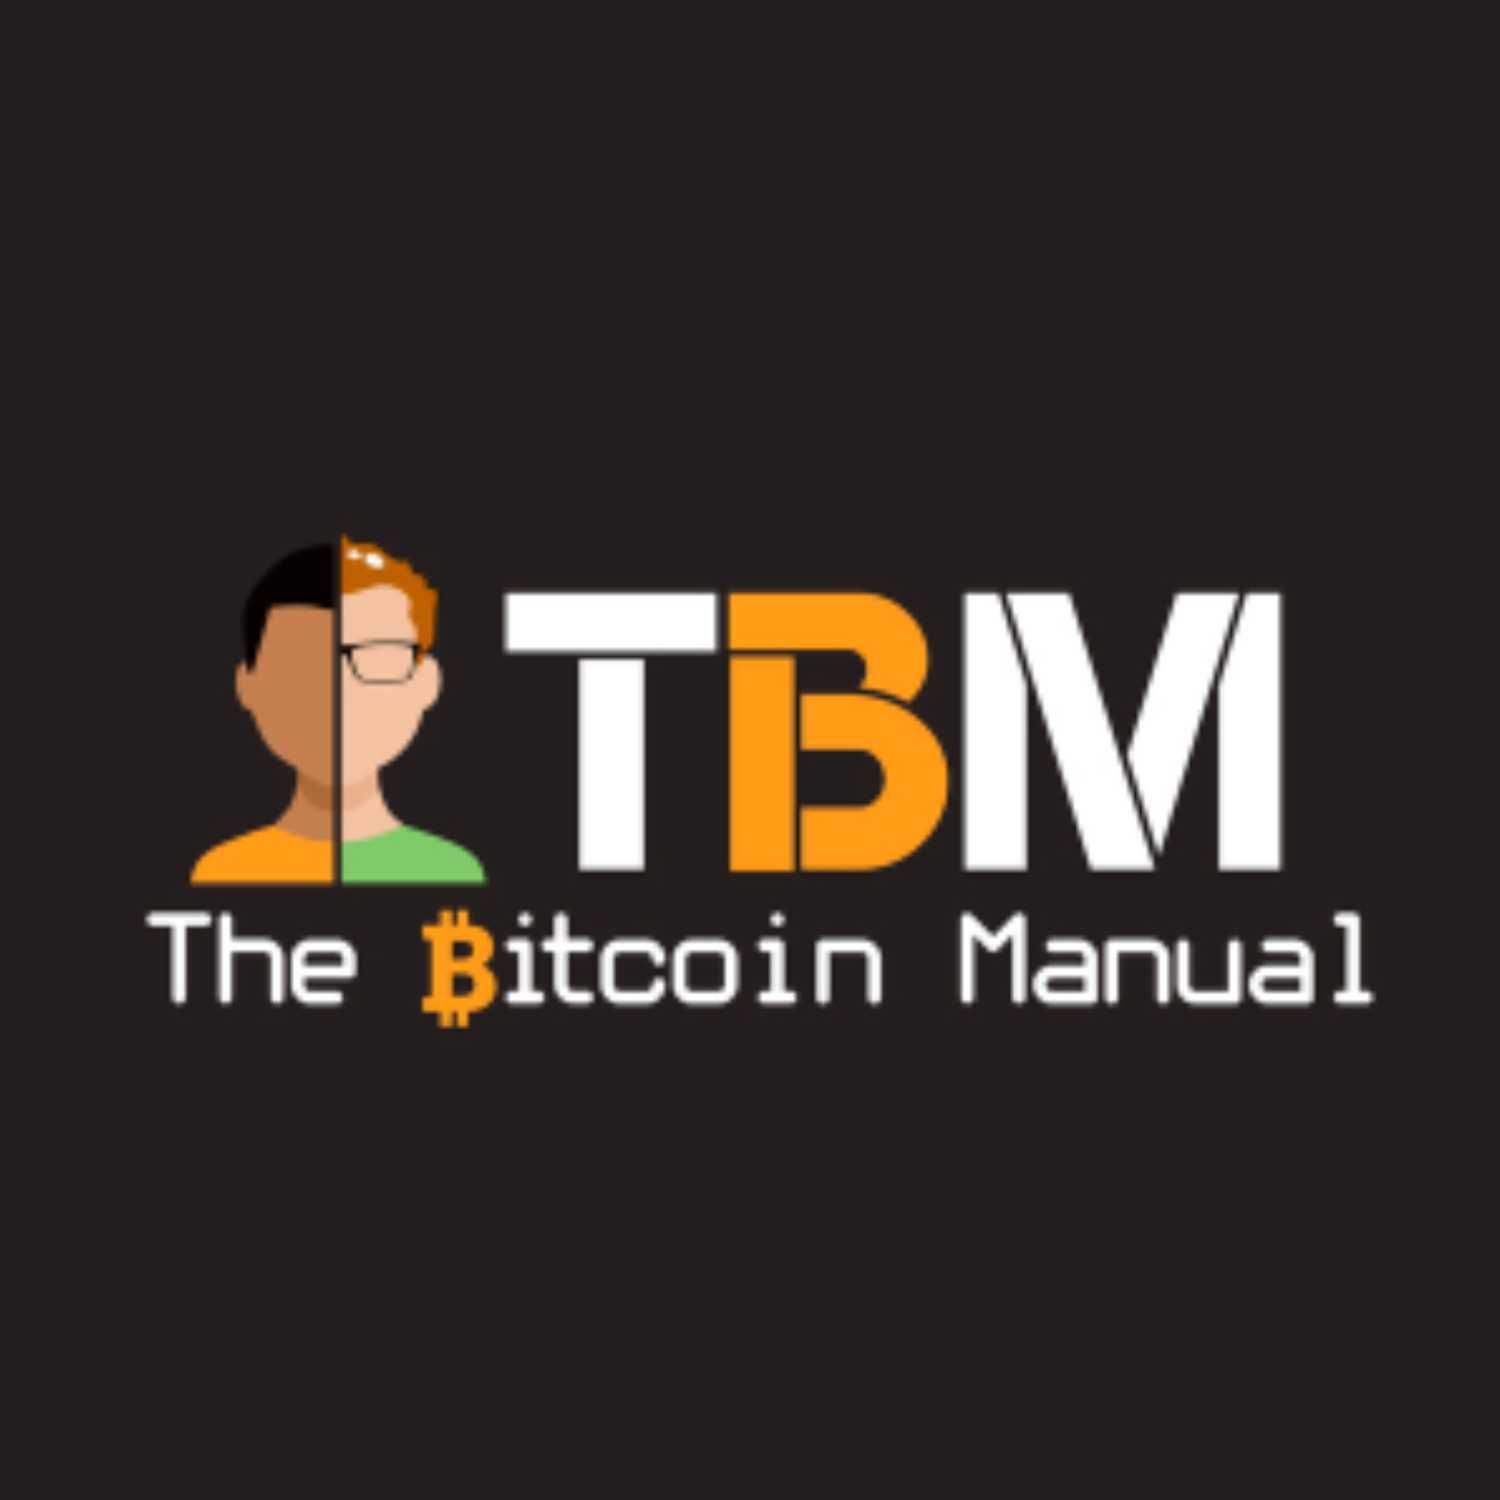 The Bitcoin Manual